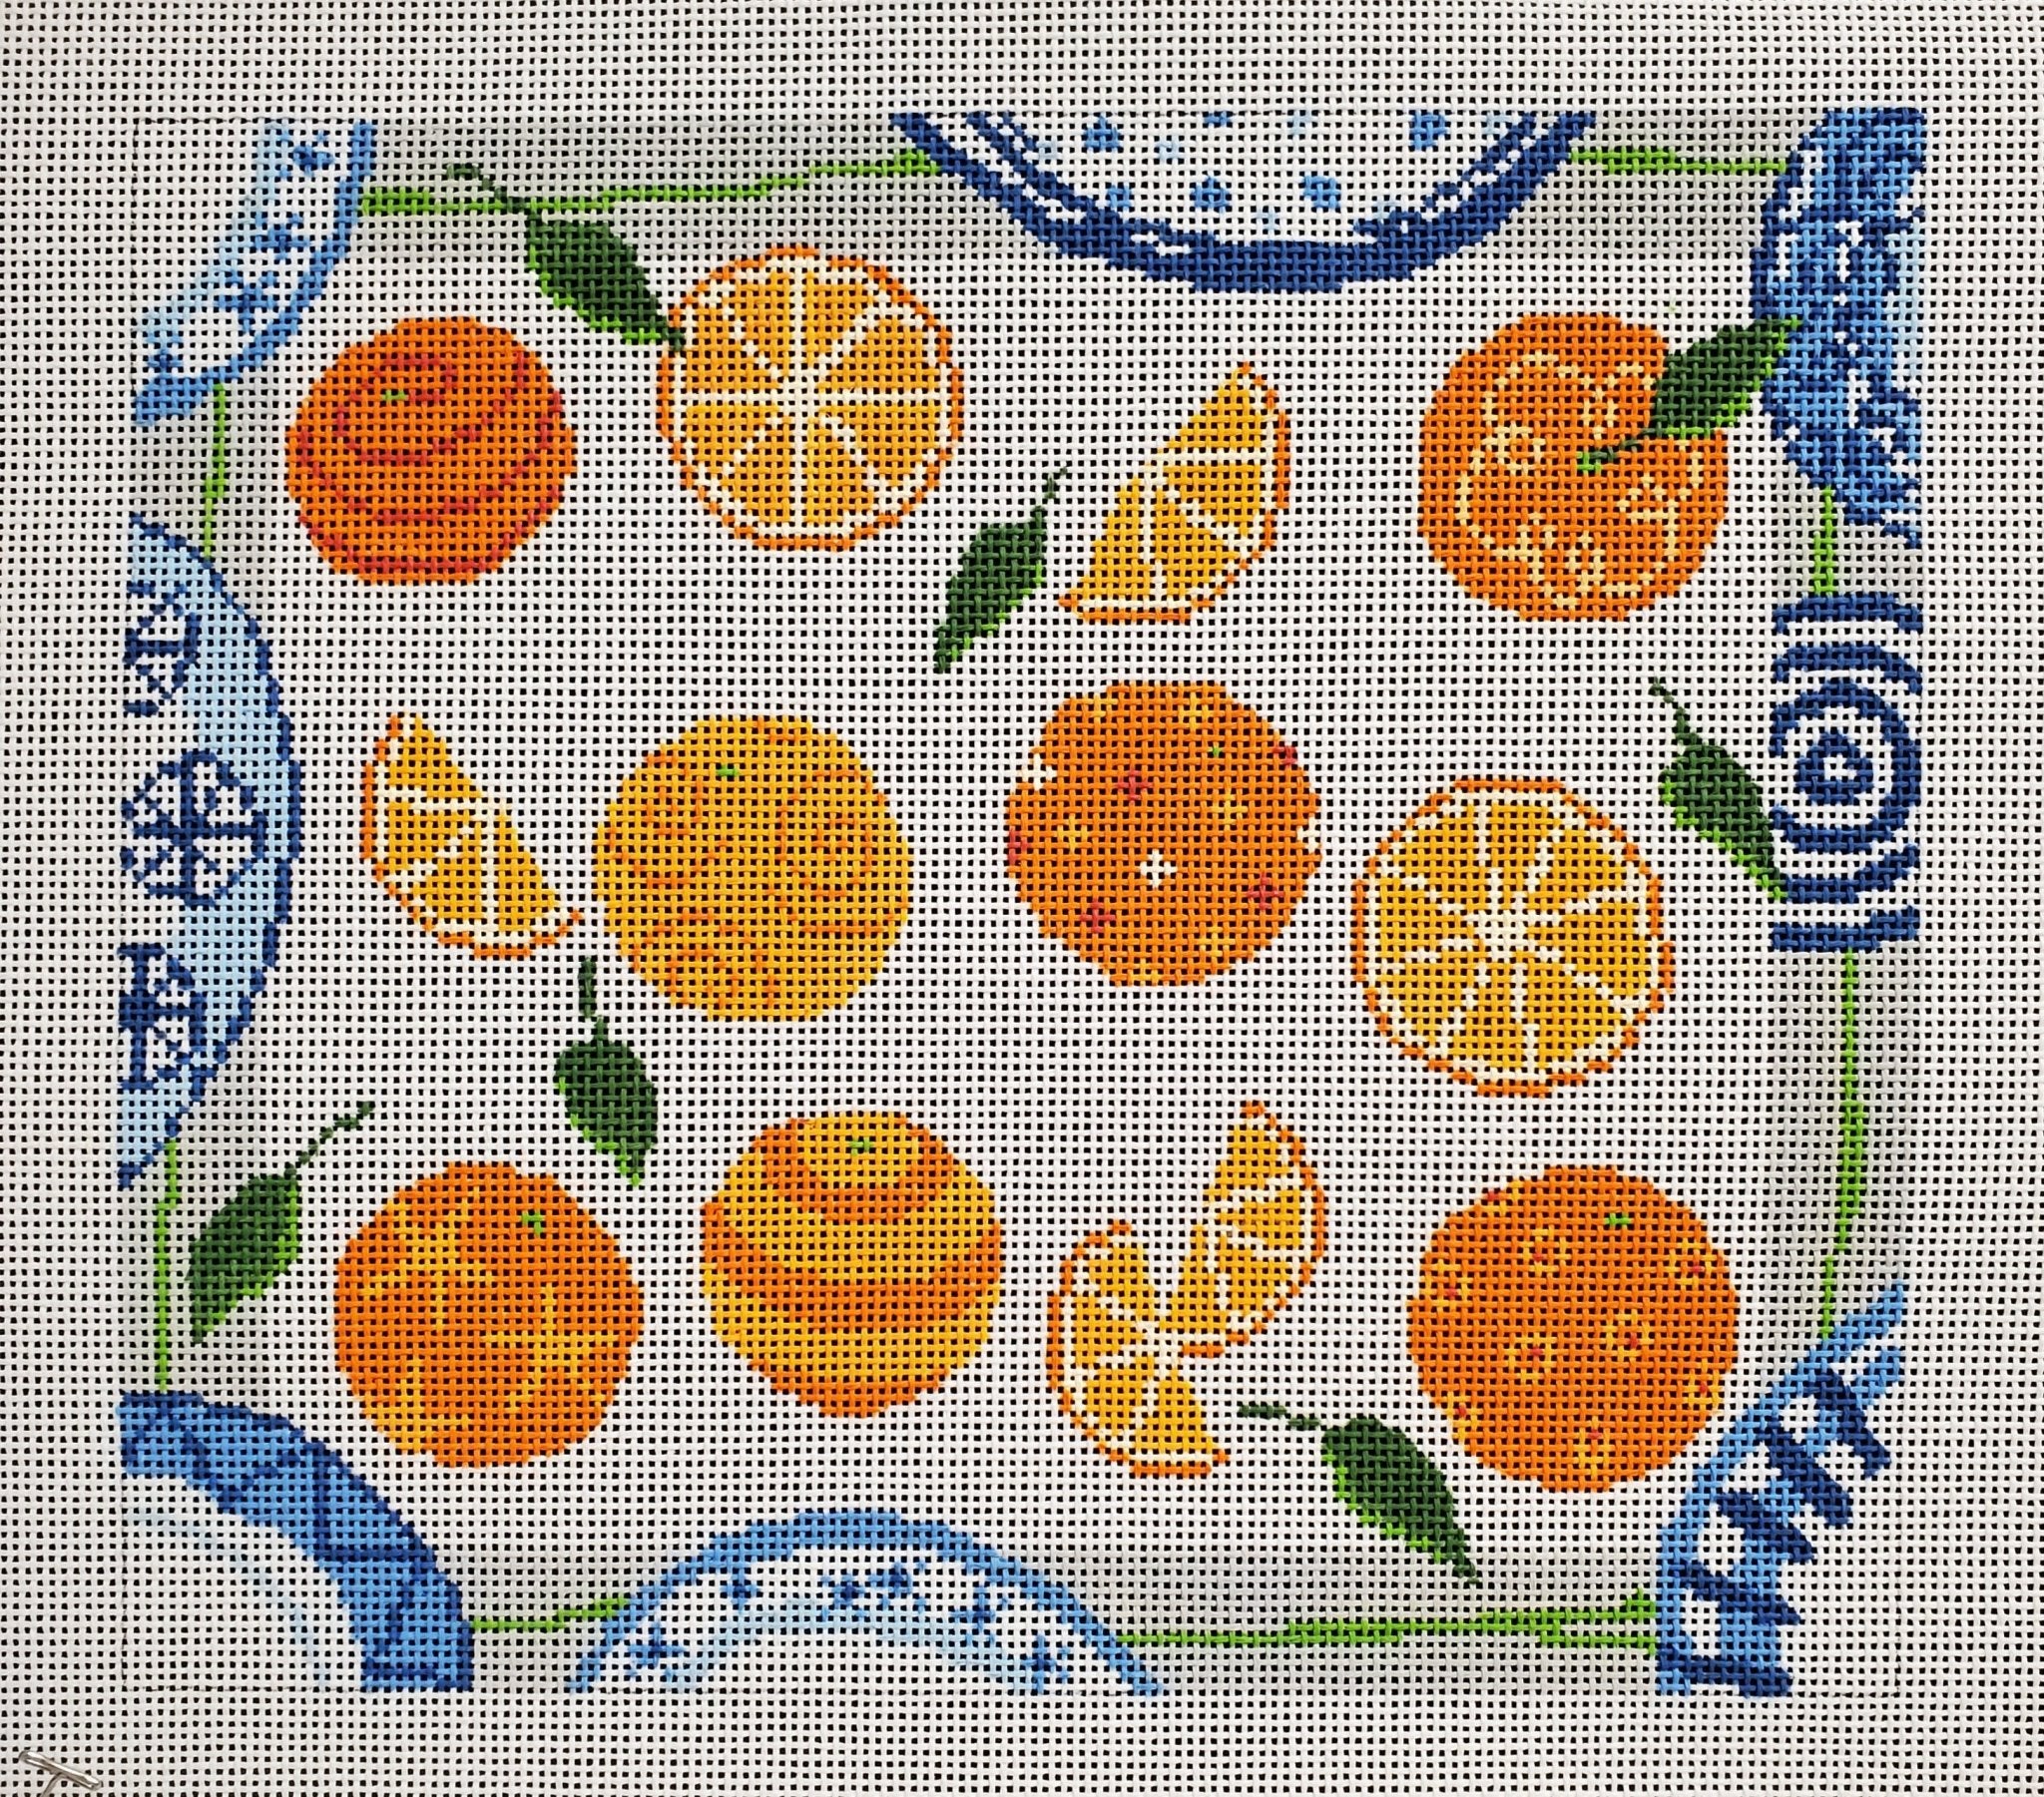 Oranges - The Flying Needles